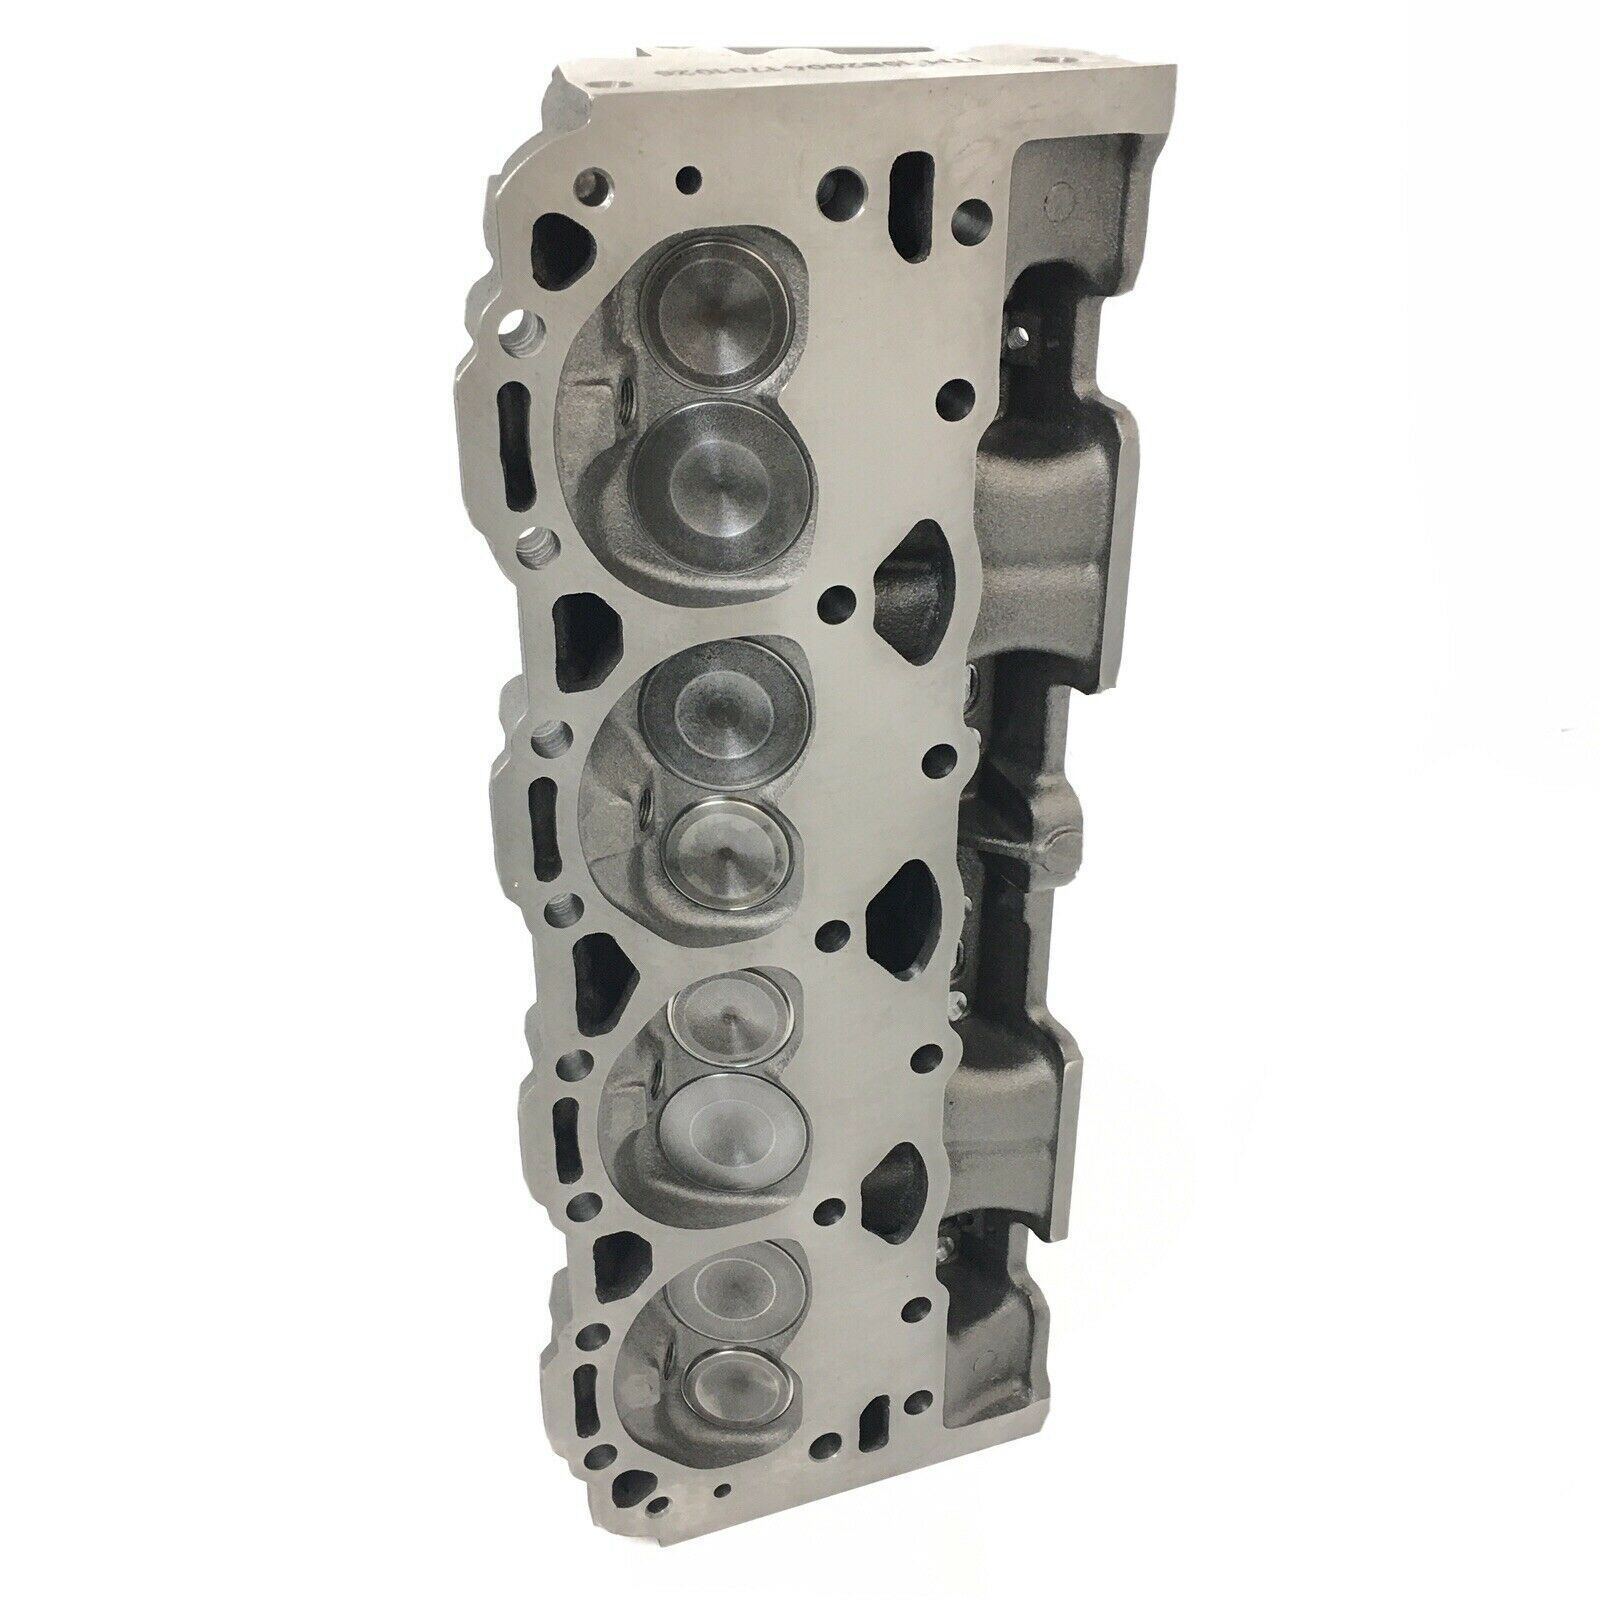 Chev 350 Vortec 5.7L GM Cast Iron Cylinder Head Casting 10239906 # 12691726